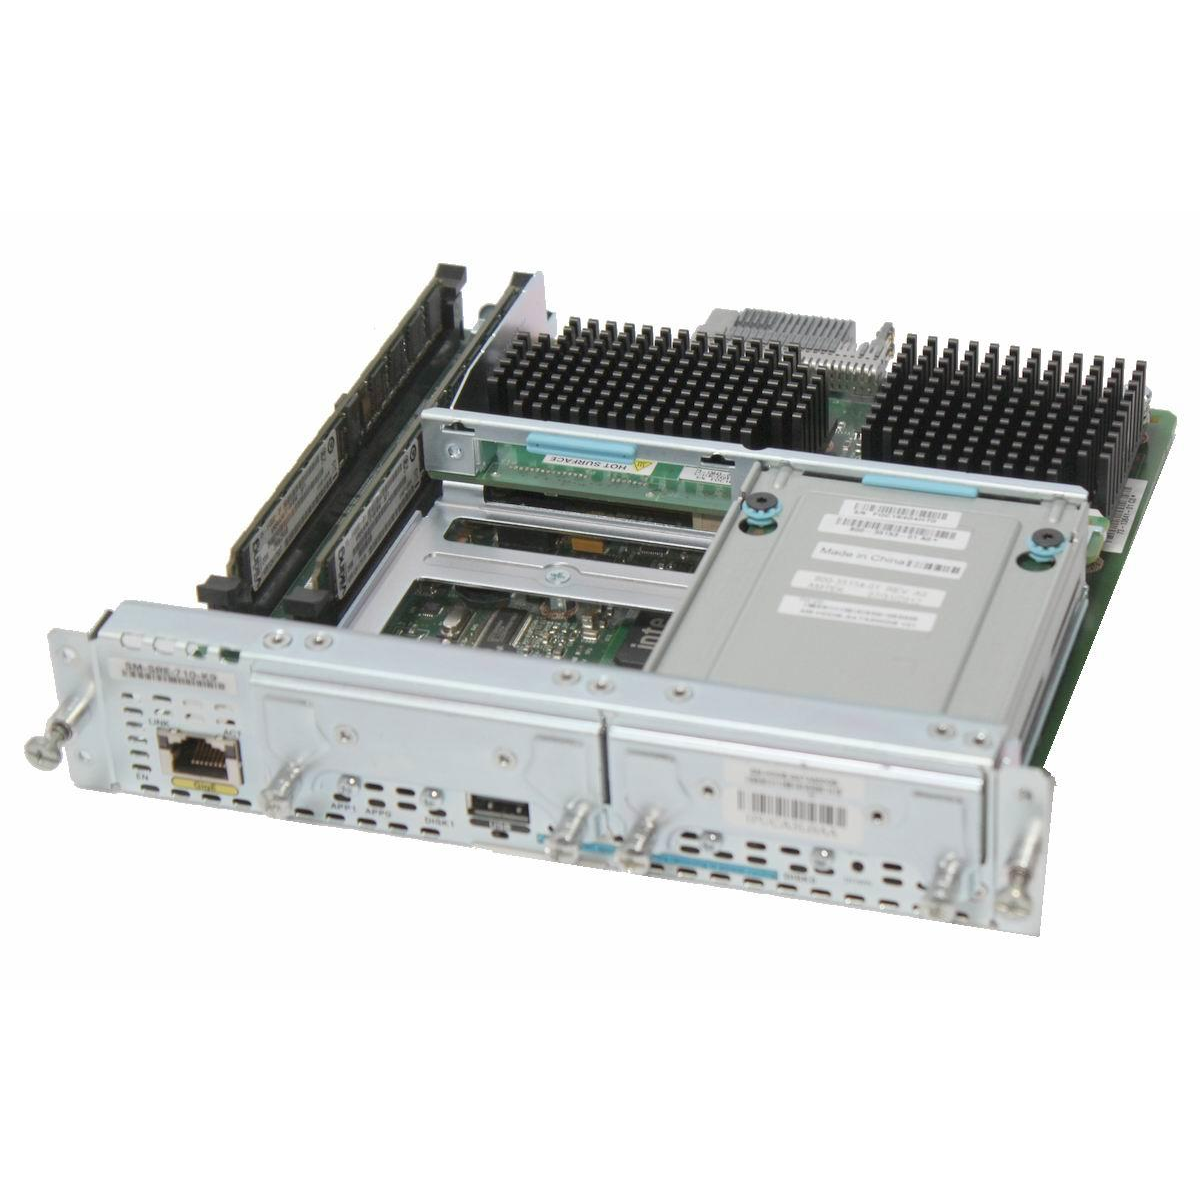 Модуль Cisco SM-SRE-710-K9